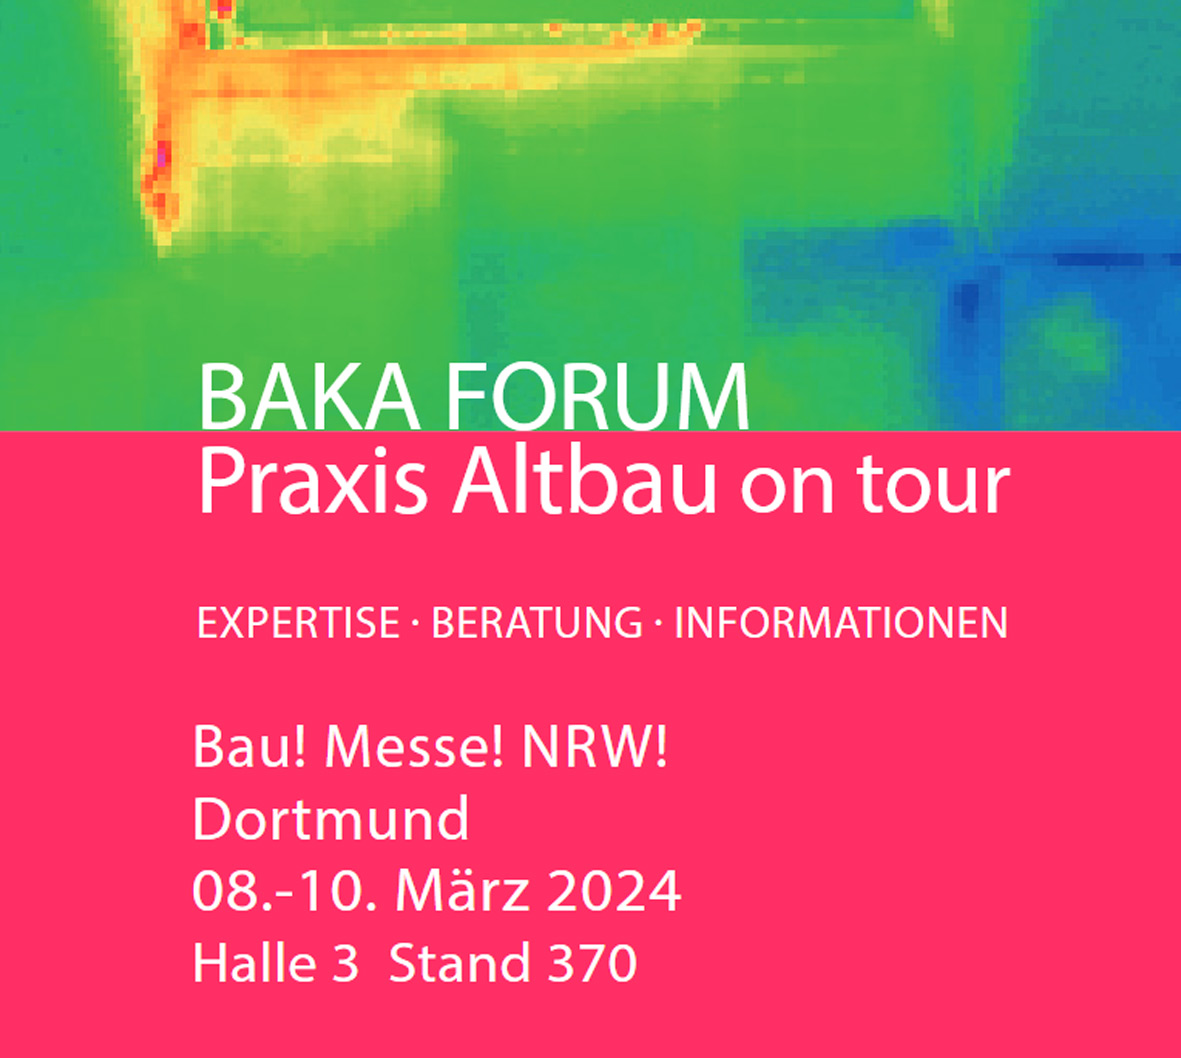 Bau Messe NRW Dortmund BAKA Forum Praxis Altbau on tour